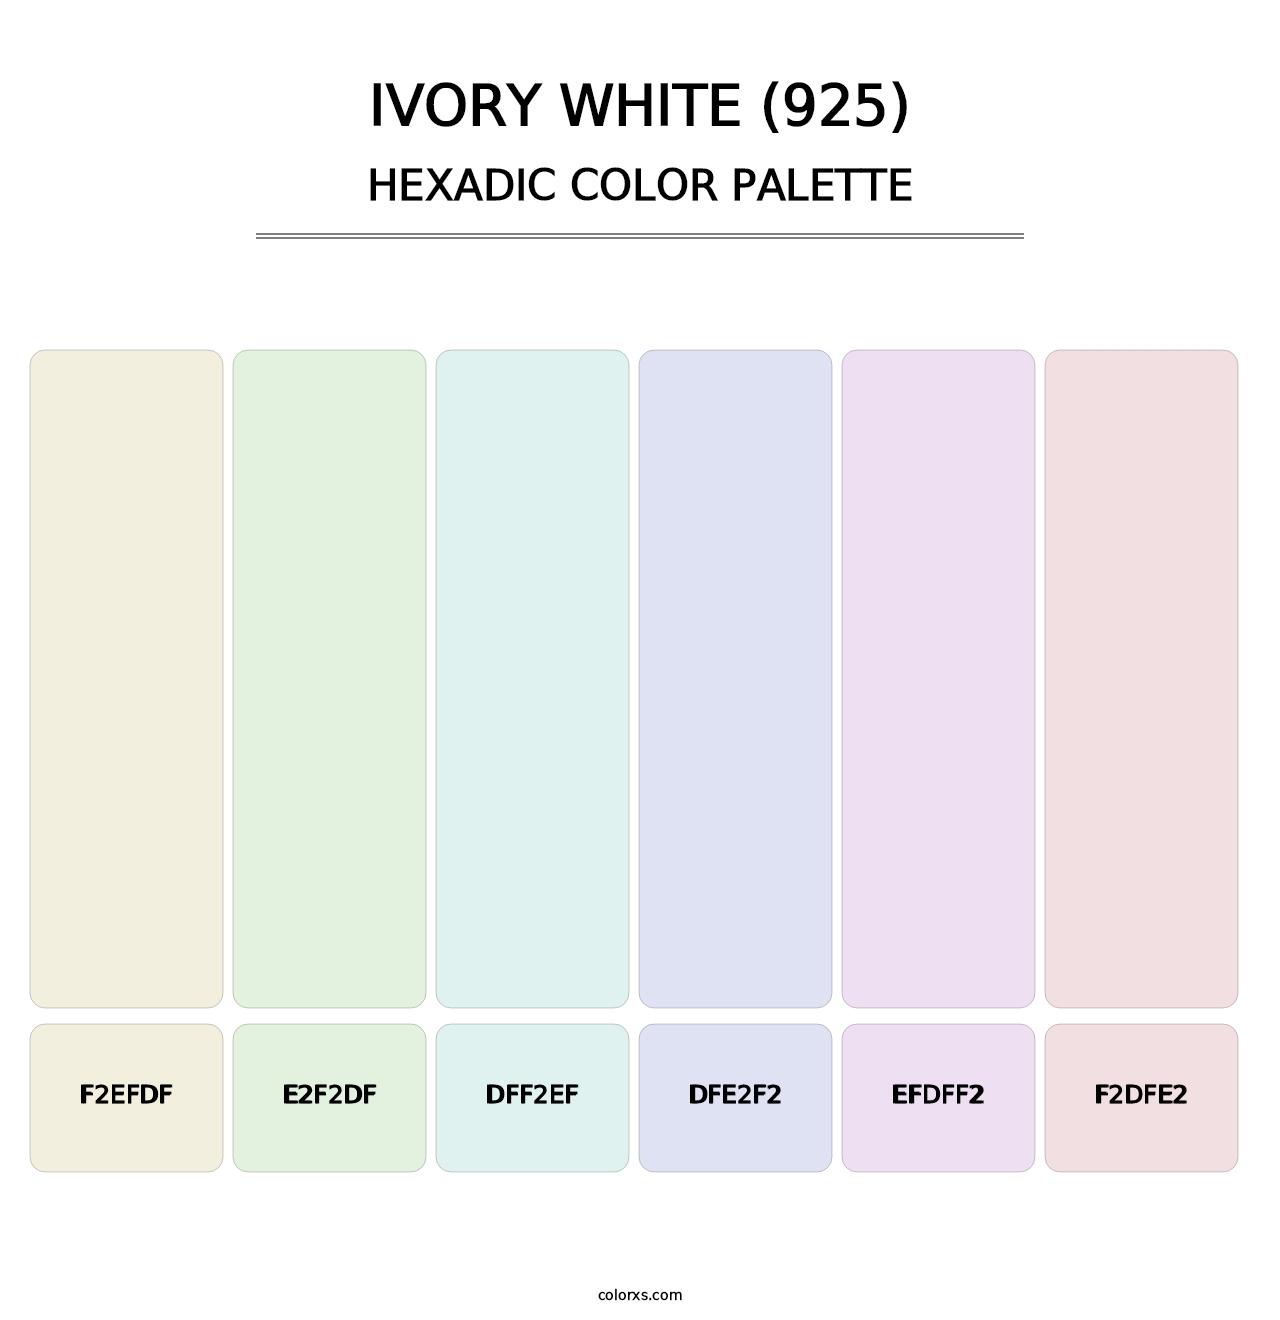 Ivory White (925) - Hexadic Color Palette